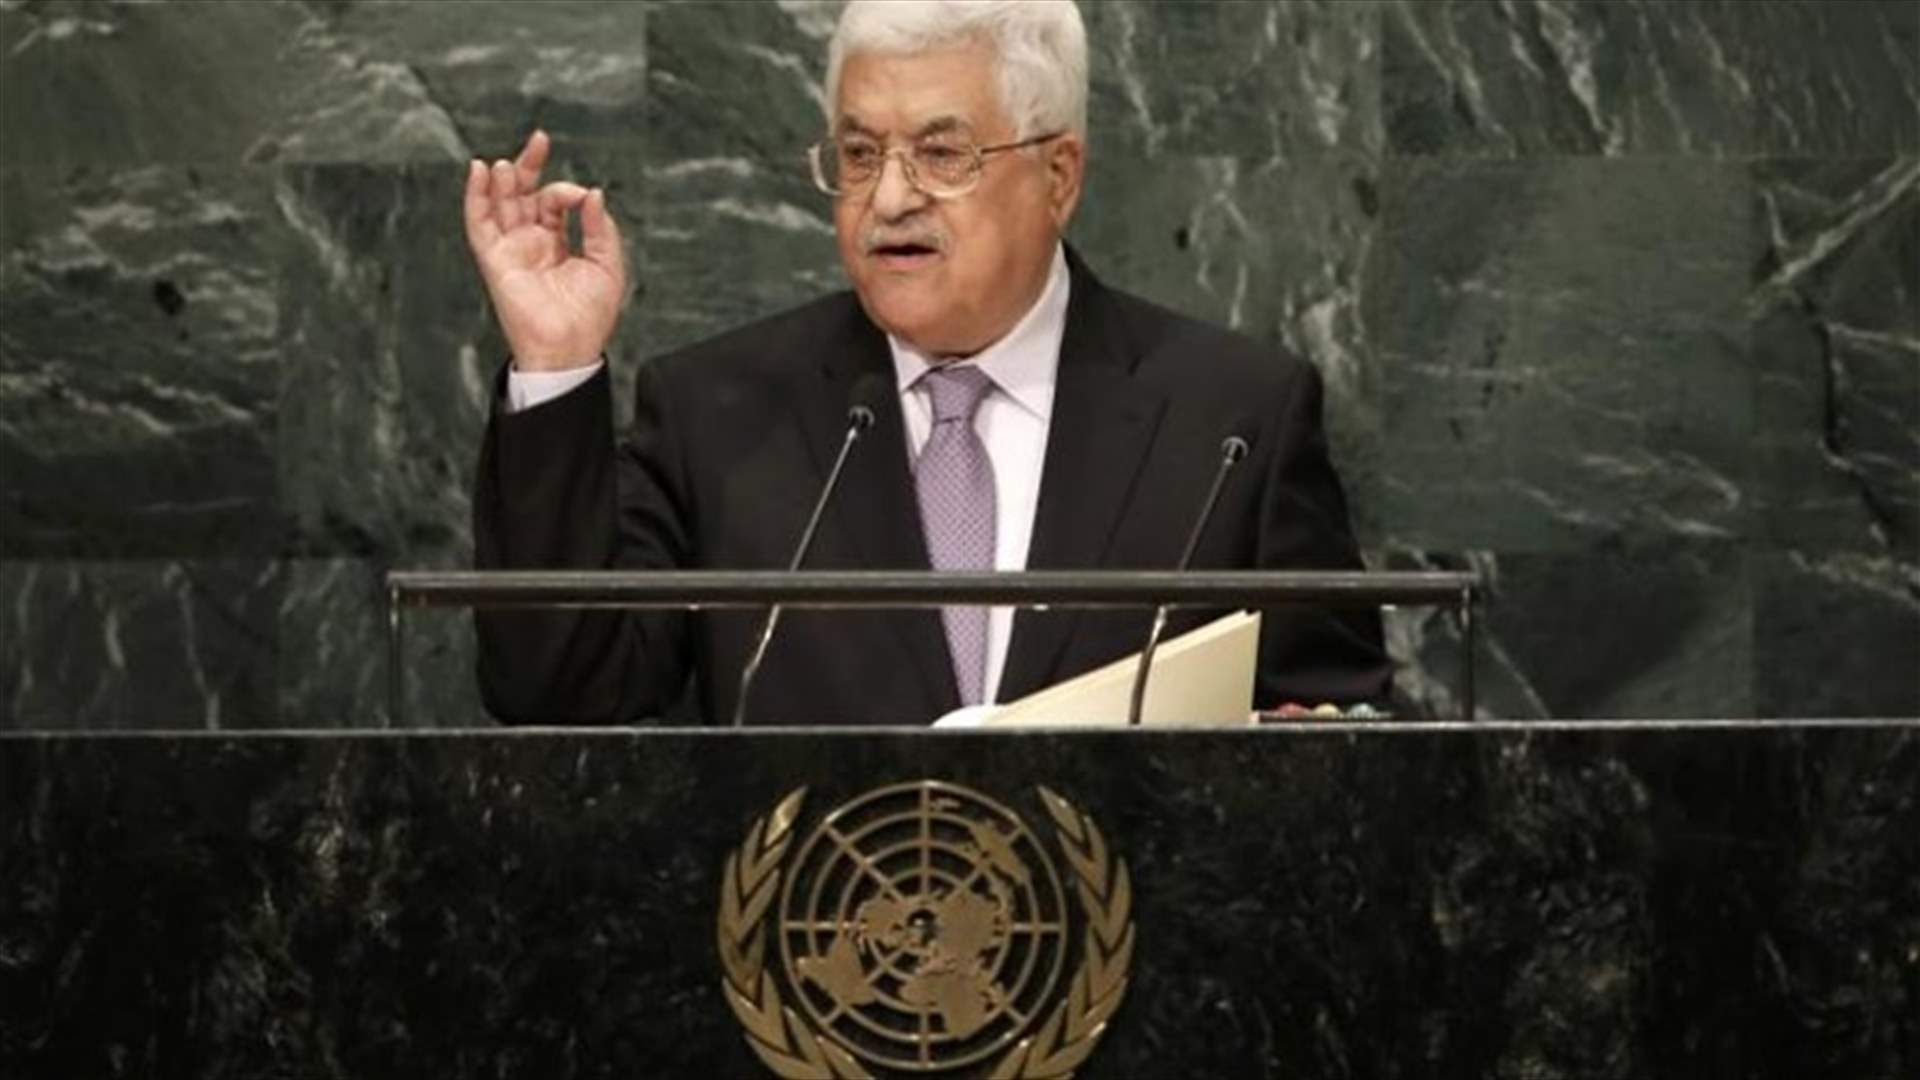 Abbas seeks British apology for 1917 Jewish homeland declaration